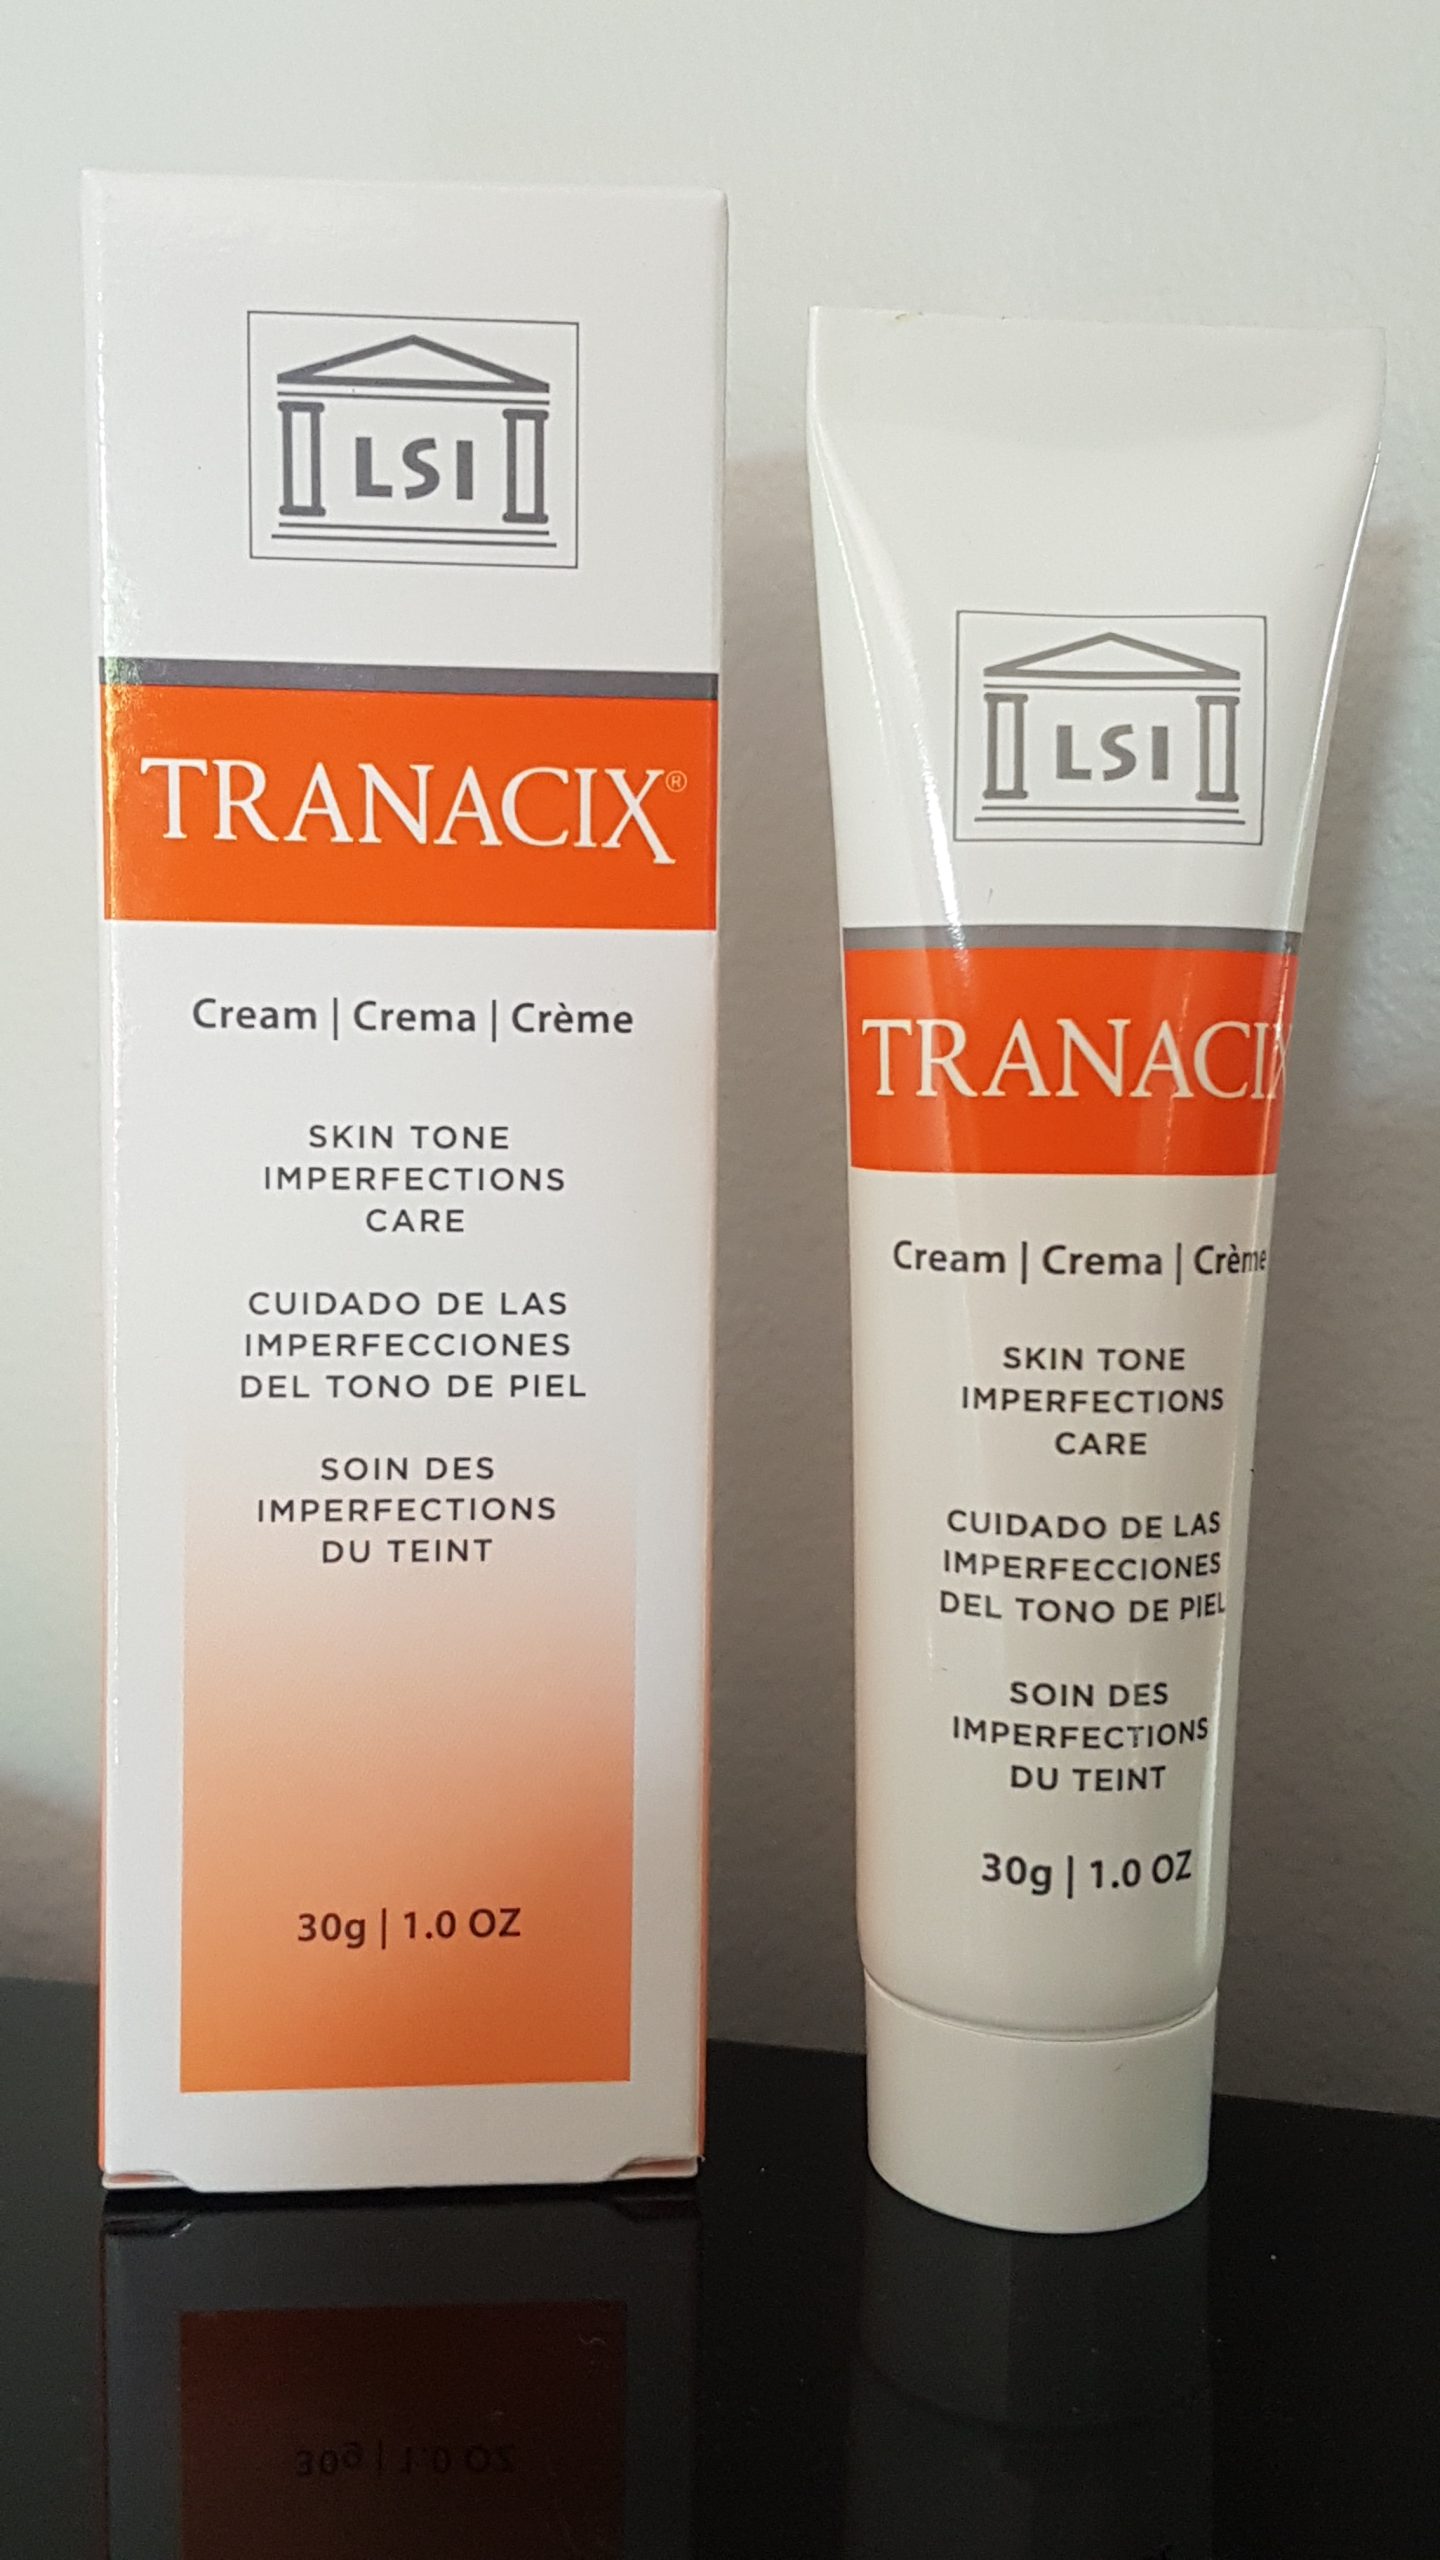 傳明美乳霜 30g (TRANACIX CREAM 30g)